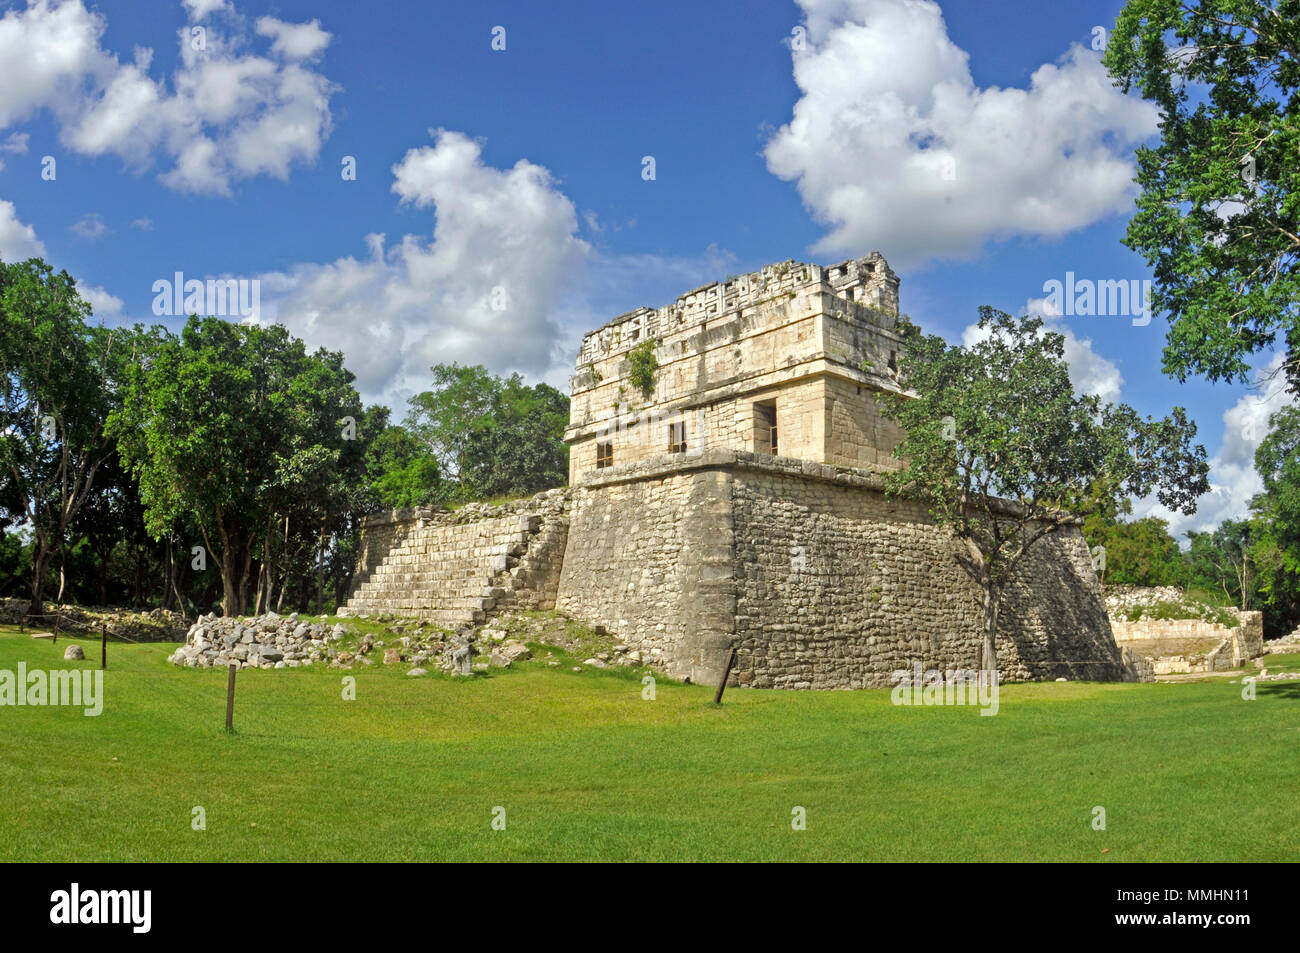 Ruins of the Mayan House of the Deer or 'Casa del Venado' in the UNESCO heritage site of Chichen Itza, Merida, Yucatan Peninsula, Mexico Stock Photo